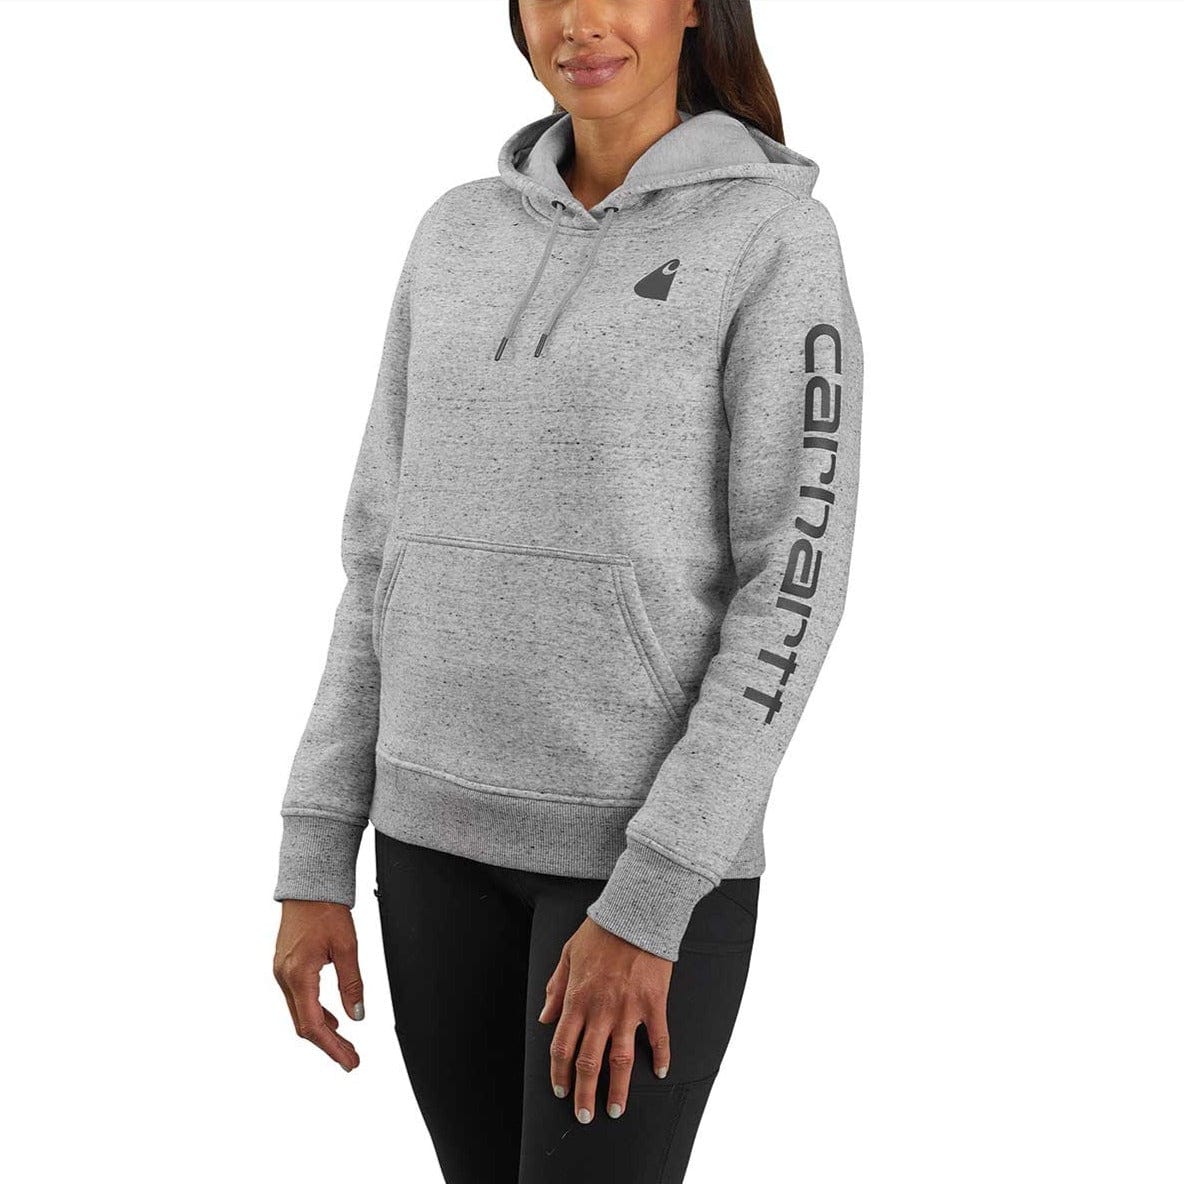 Carhartt Women's Relaxed Fit Midweight Logo Sleeve Hooded Sweatshirt